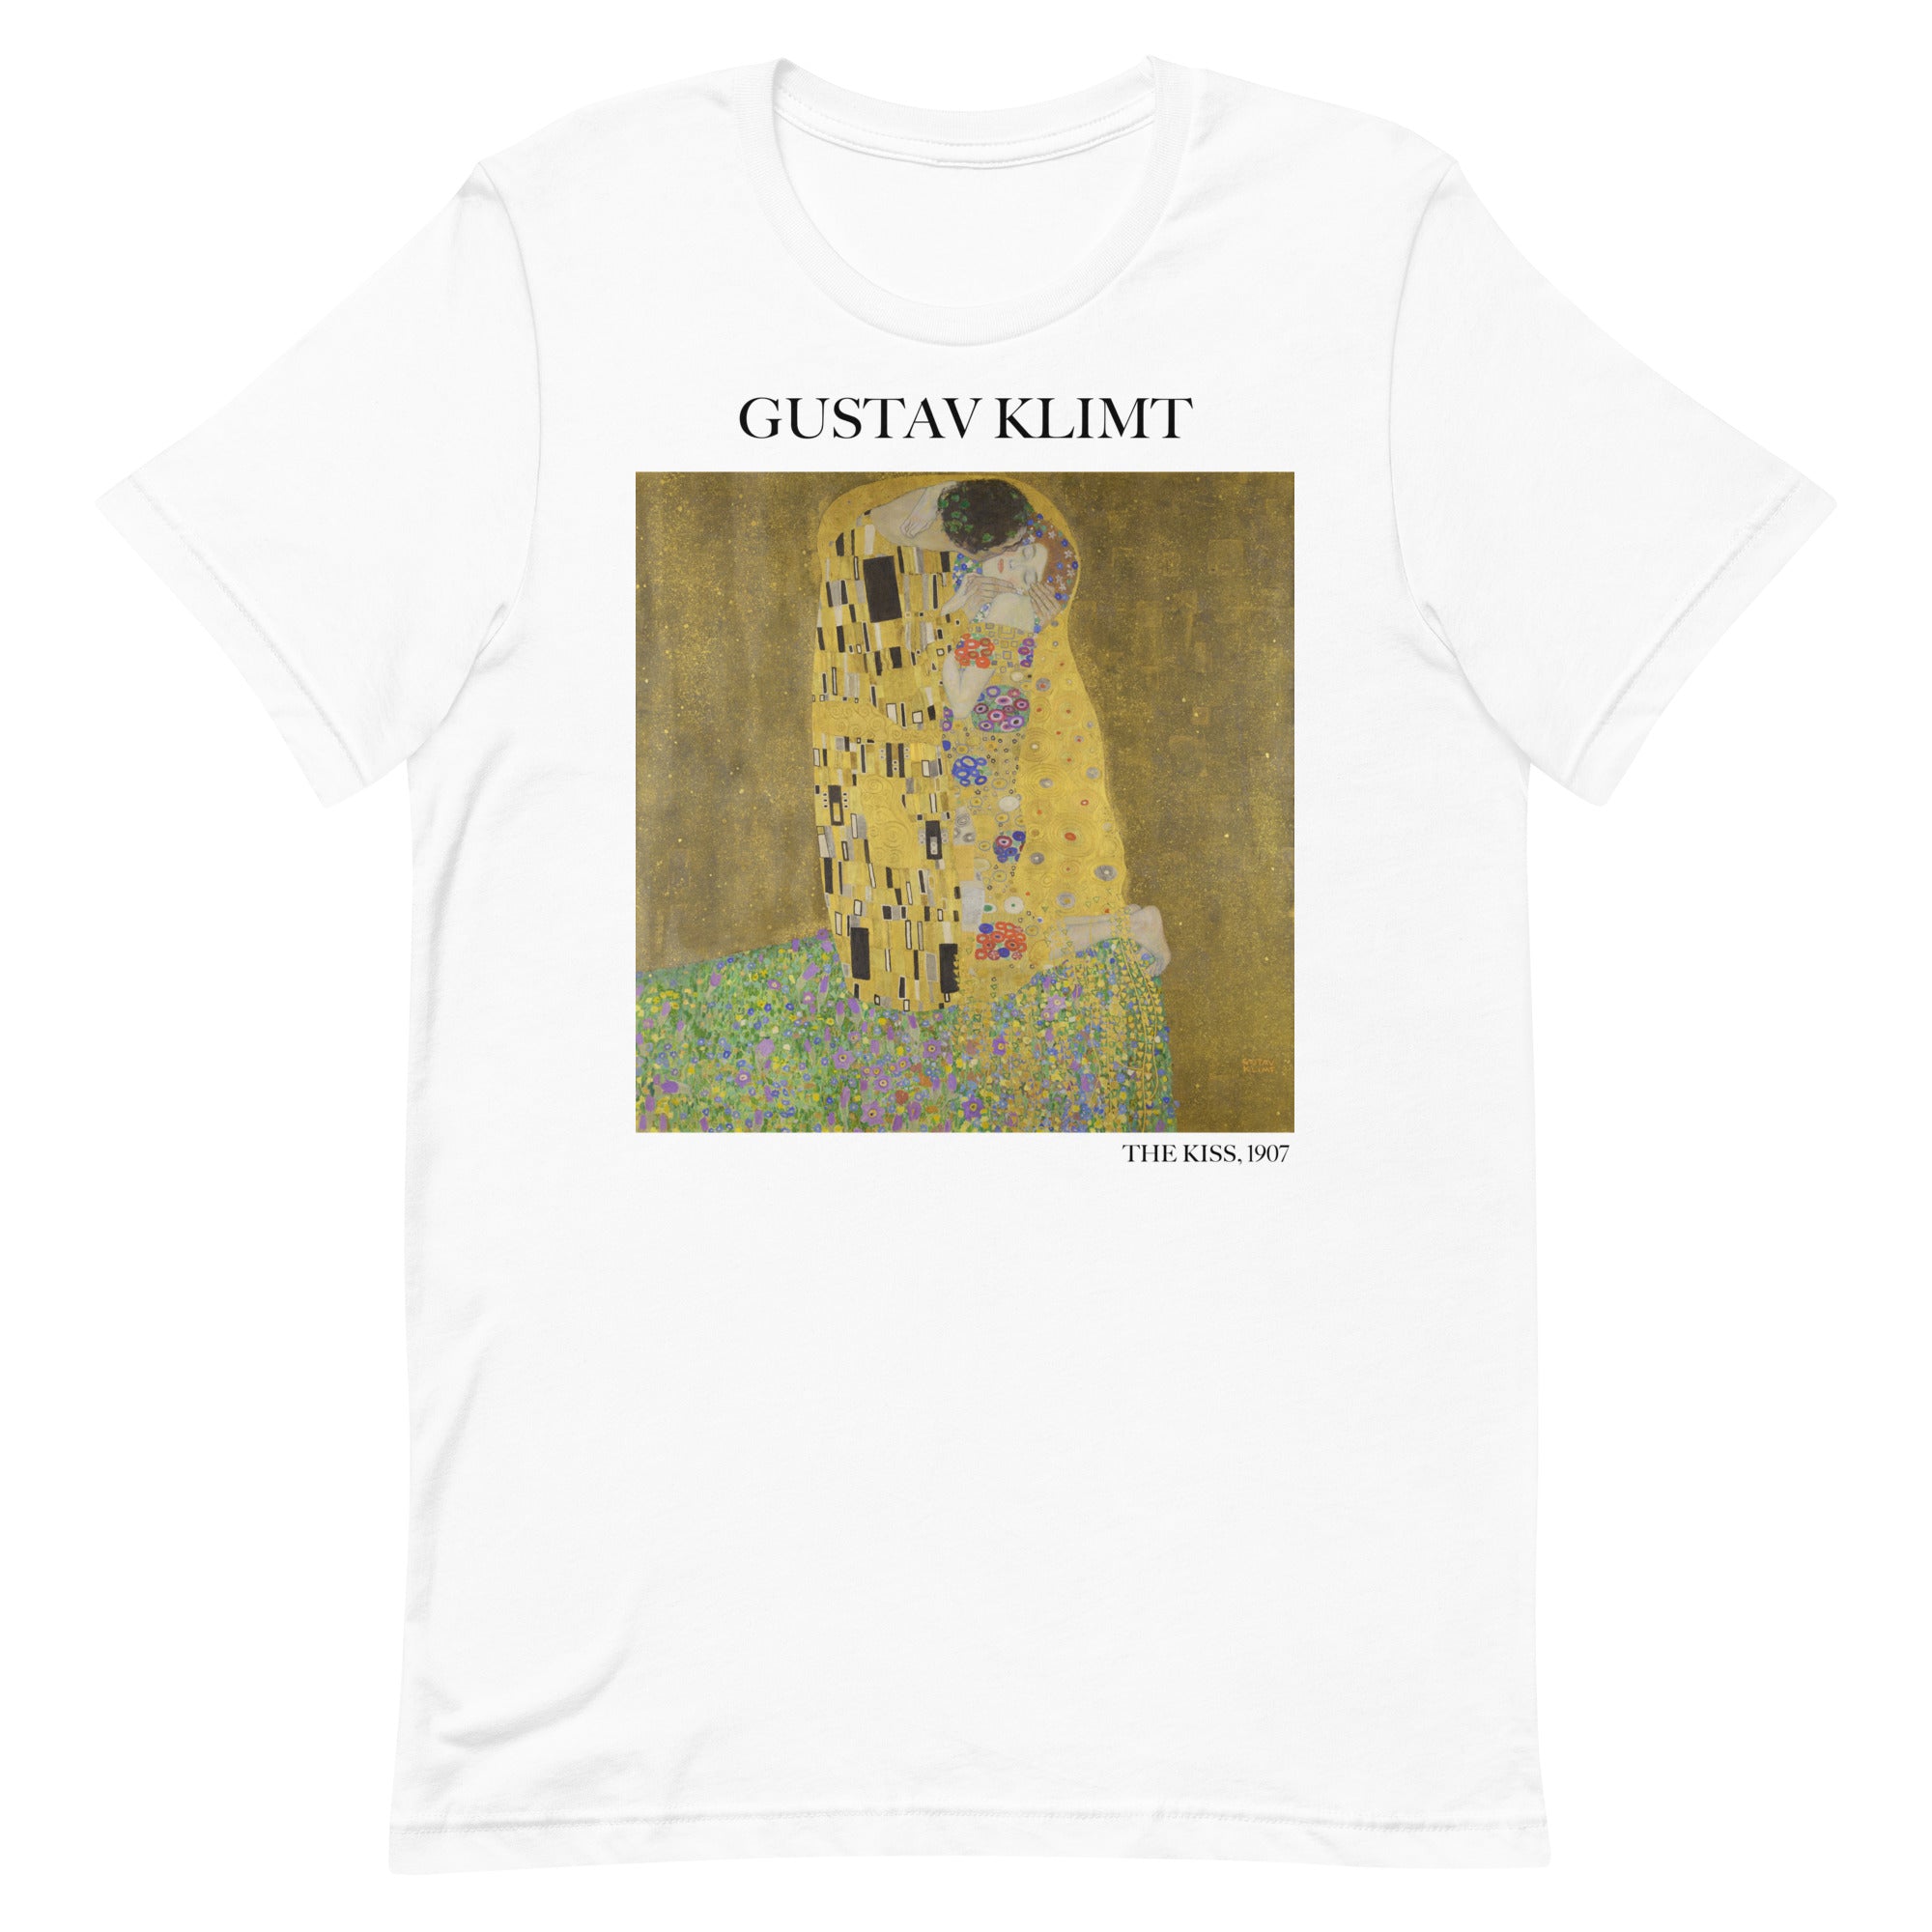 Gustav Klimt 'The Kiss' Famous Painting T-Shirt | Unisex Classic Art Tee